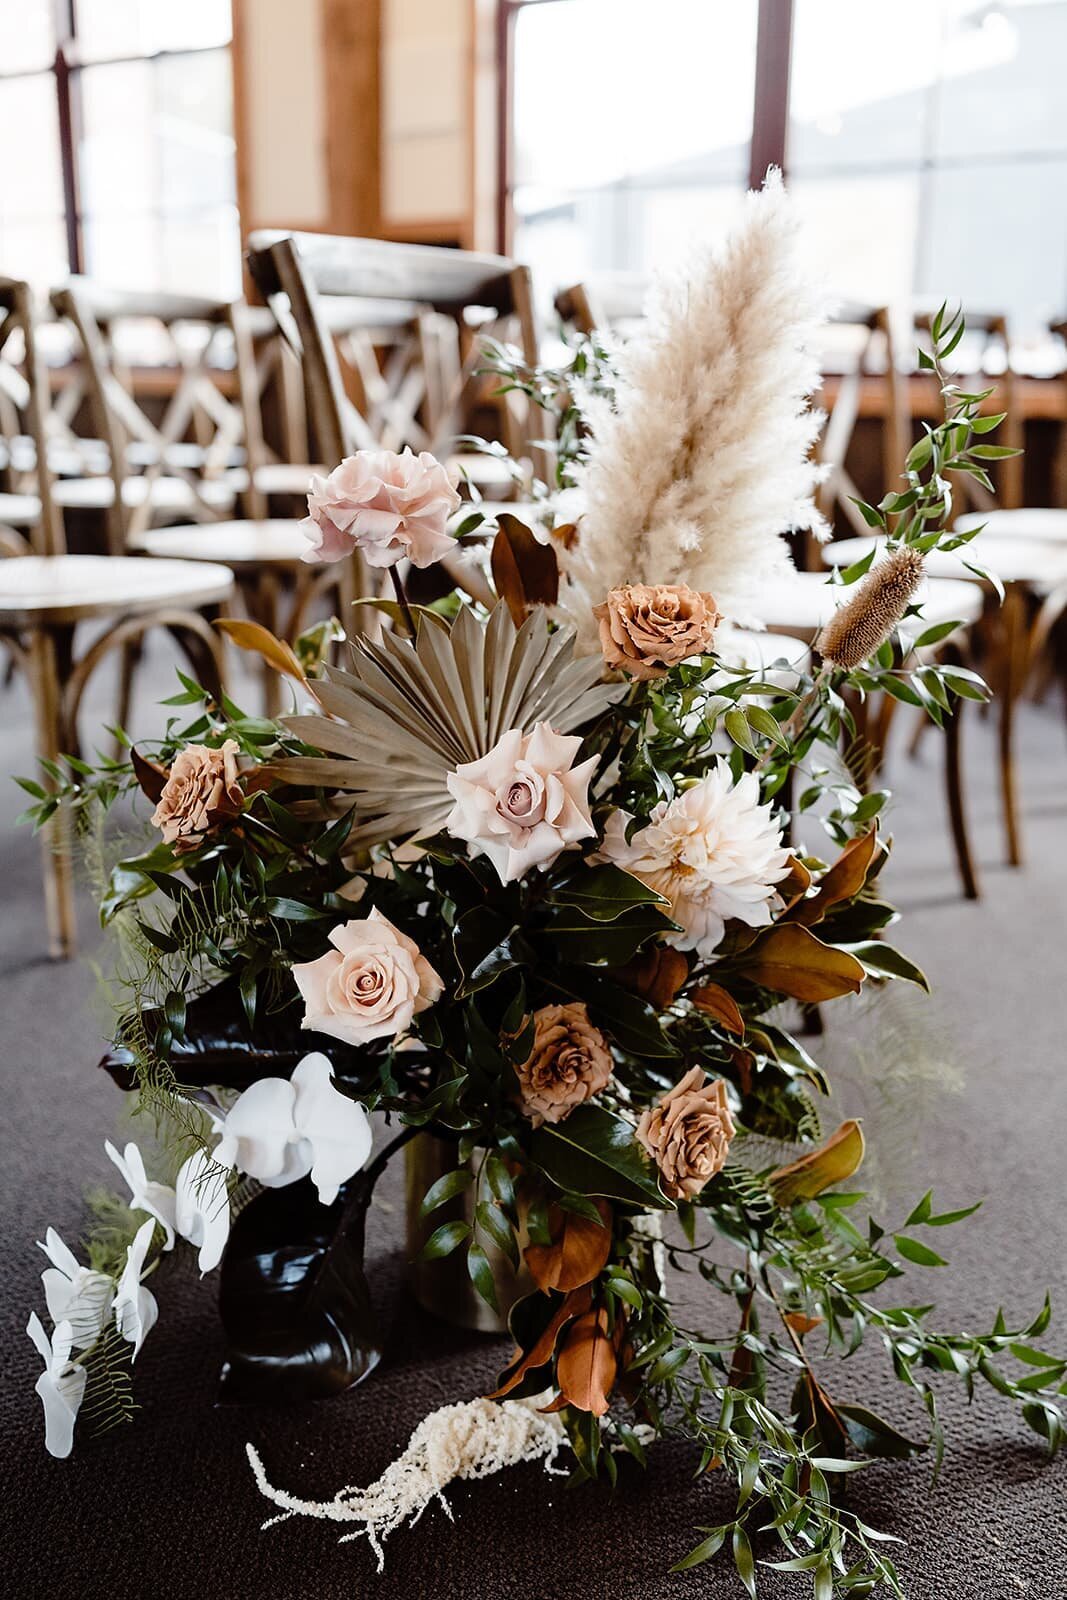 Phillip_Island_wedding_flower_tables_vases_31